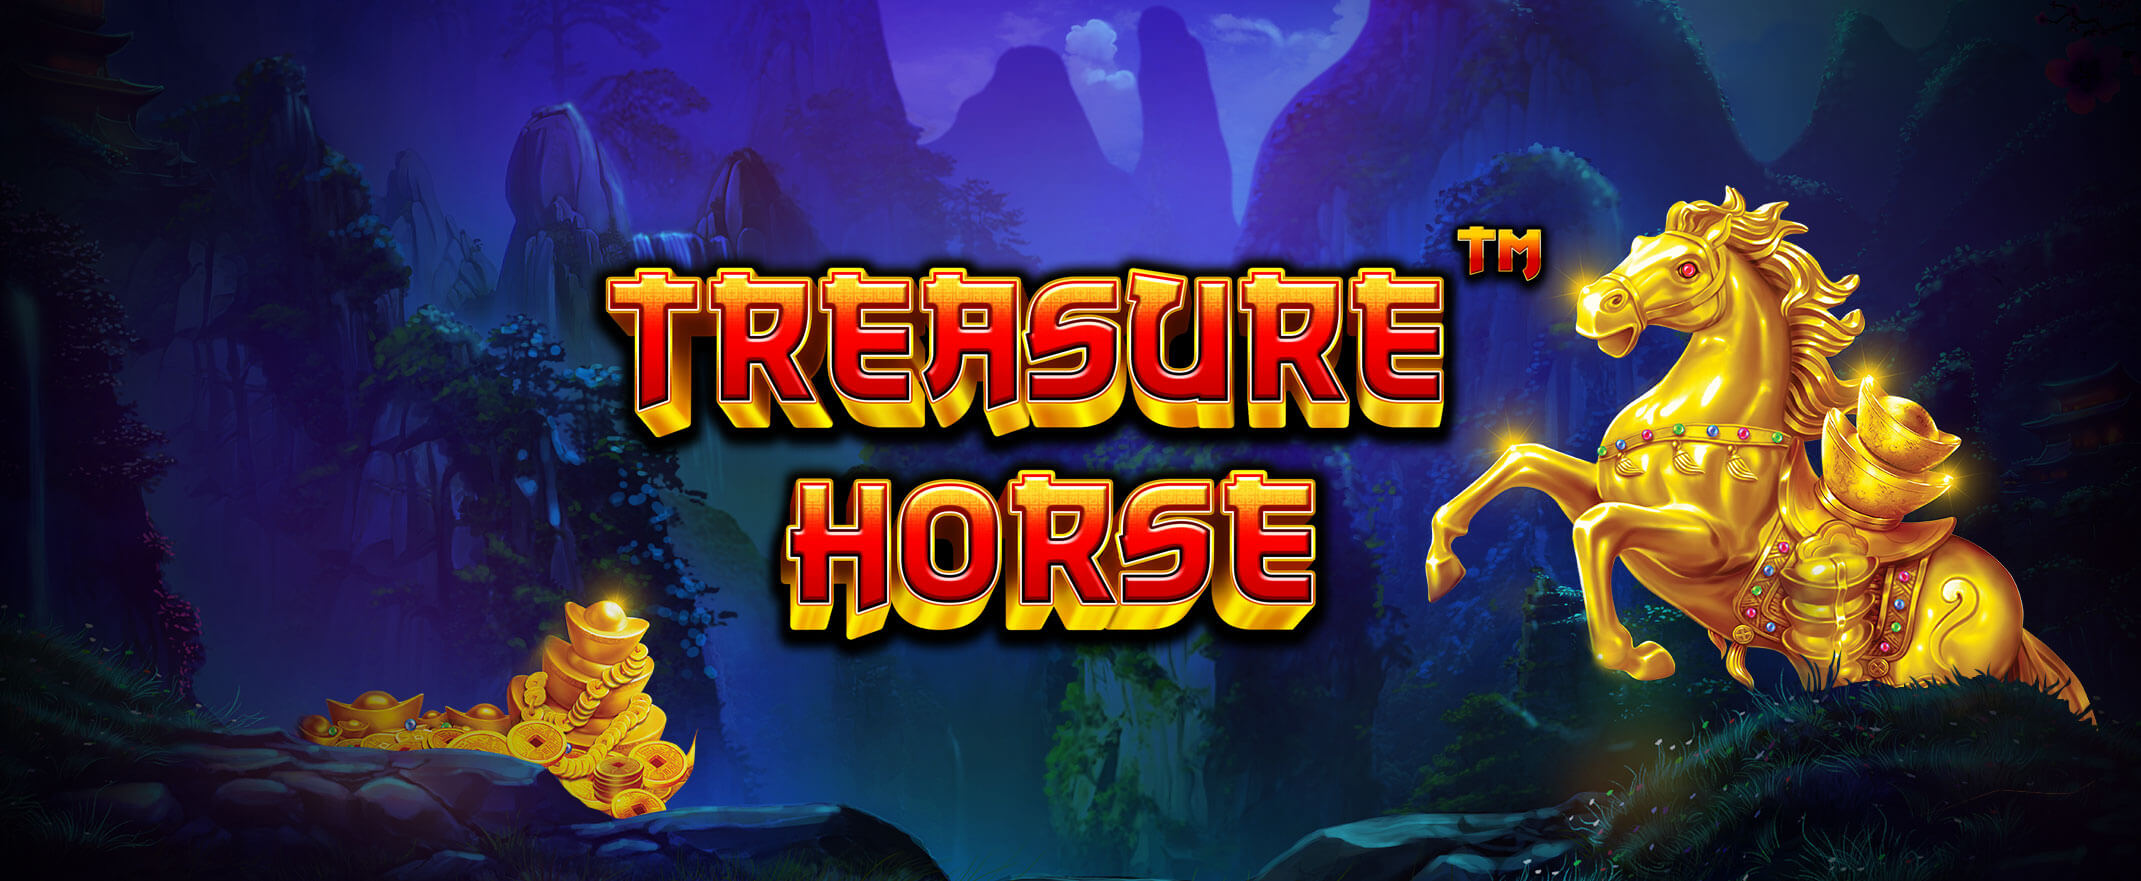 Treasure Horse video slot from Pragmatic Play